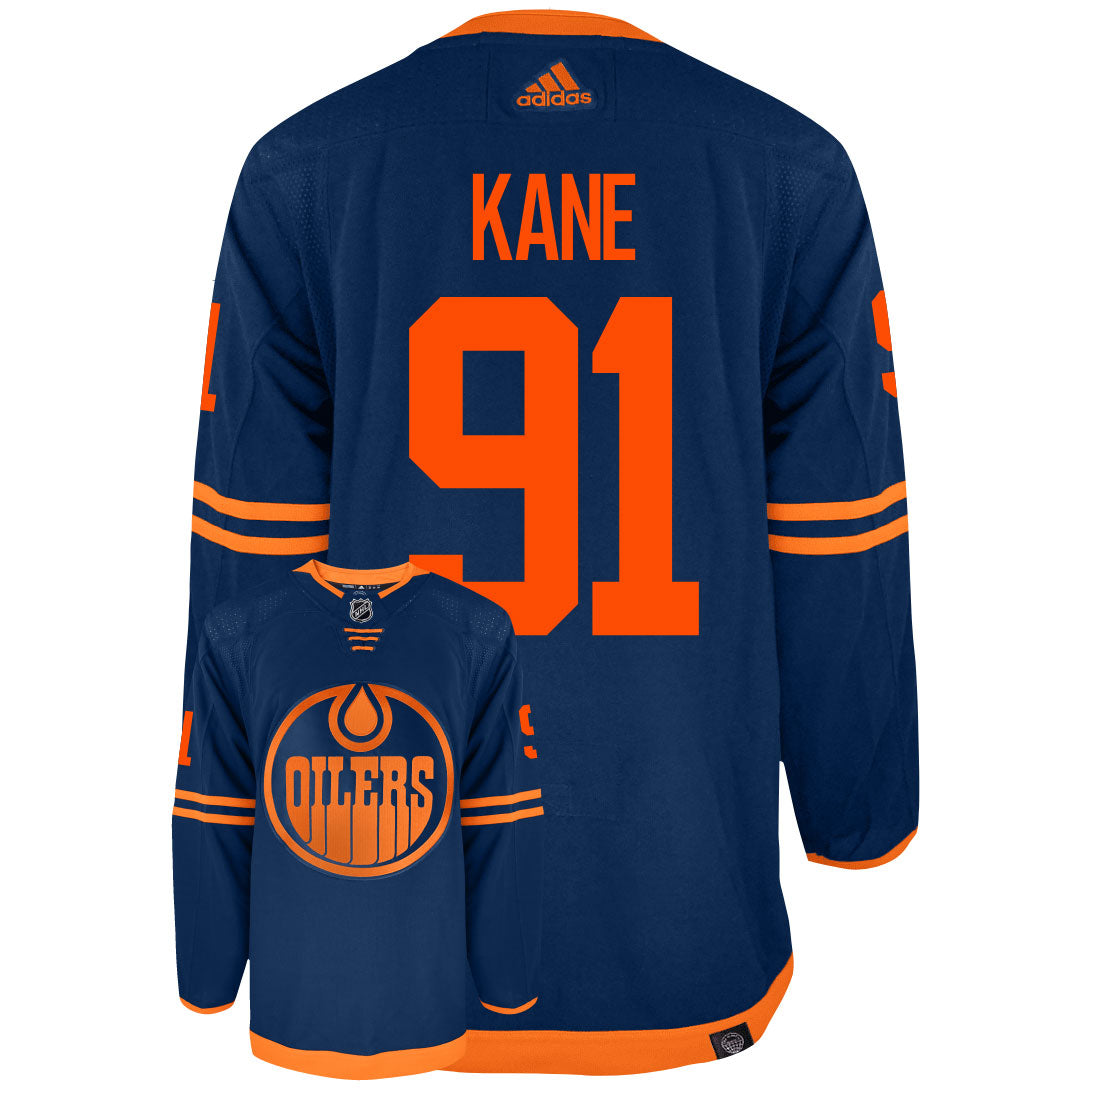 Evander Kane Edmonton Oilers Adidas Primegreen Authentic Third Alternate NHL Hockey Jersey - Back/Front View